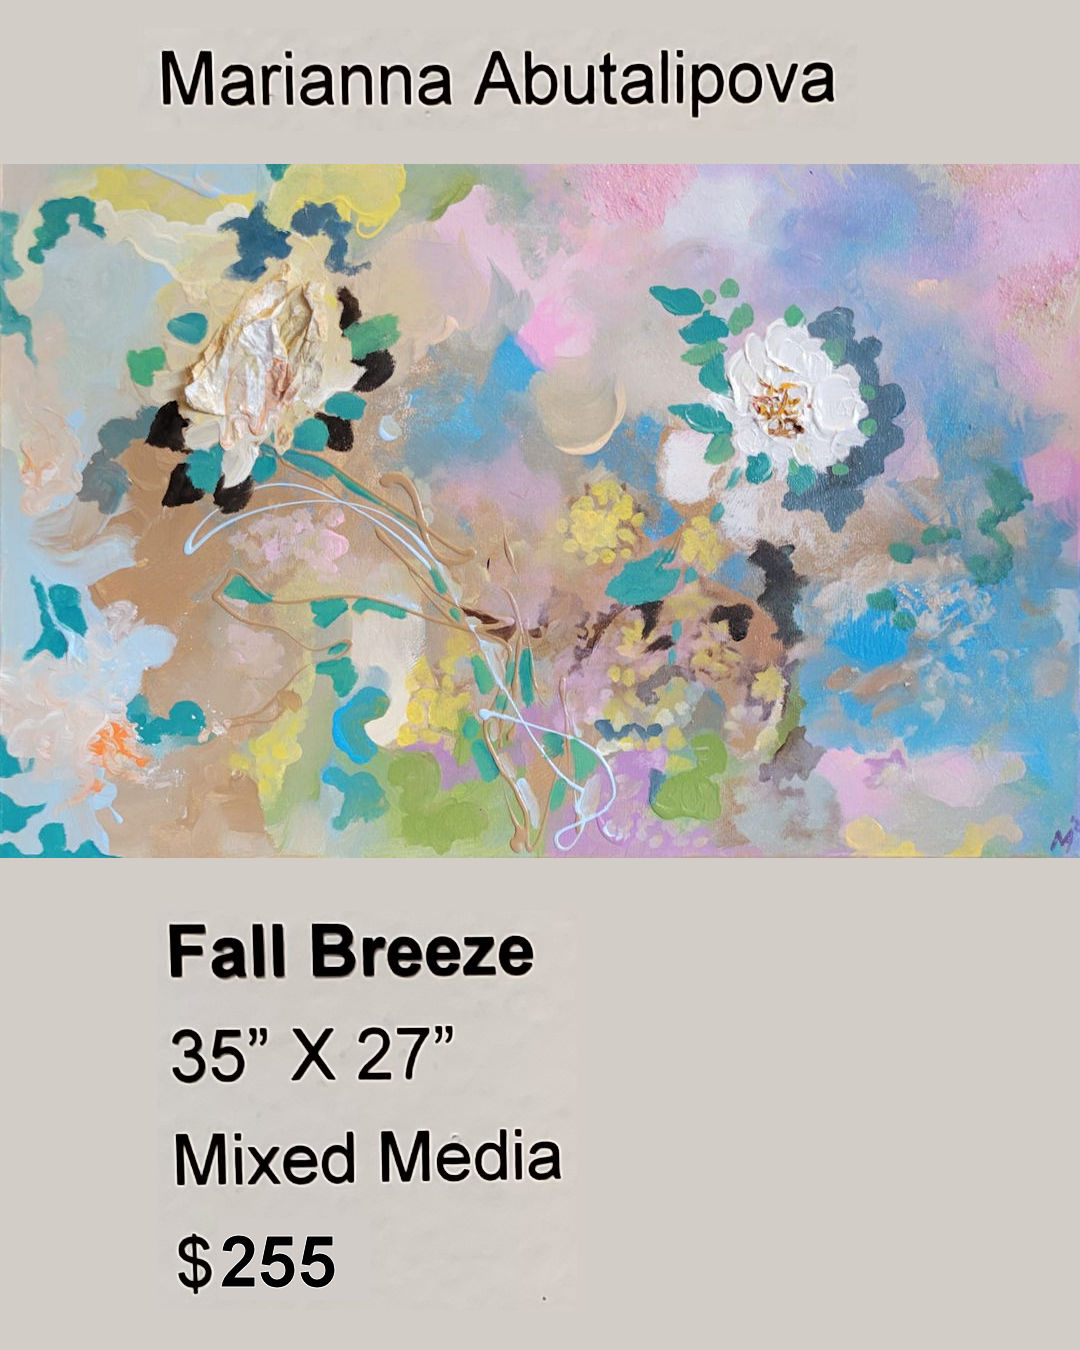 Fall Breeze — Marianna Abutalipova